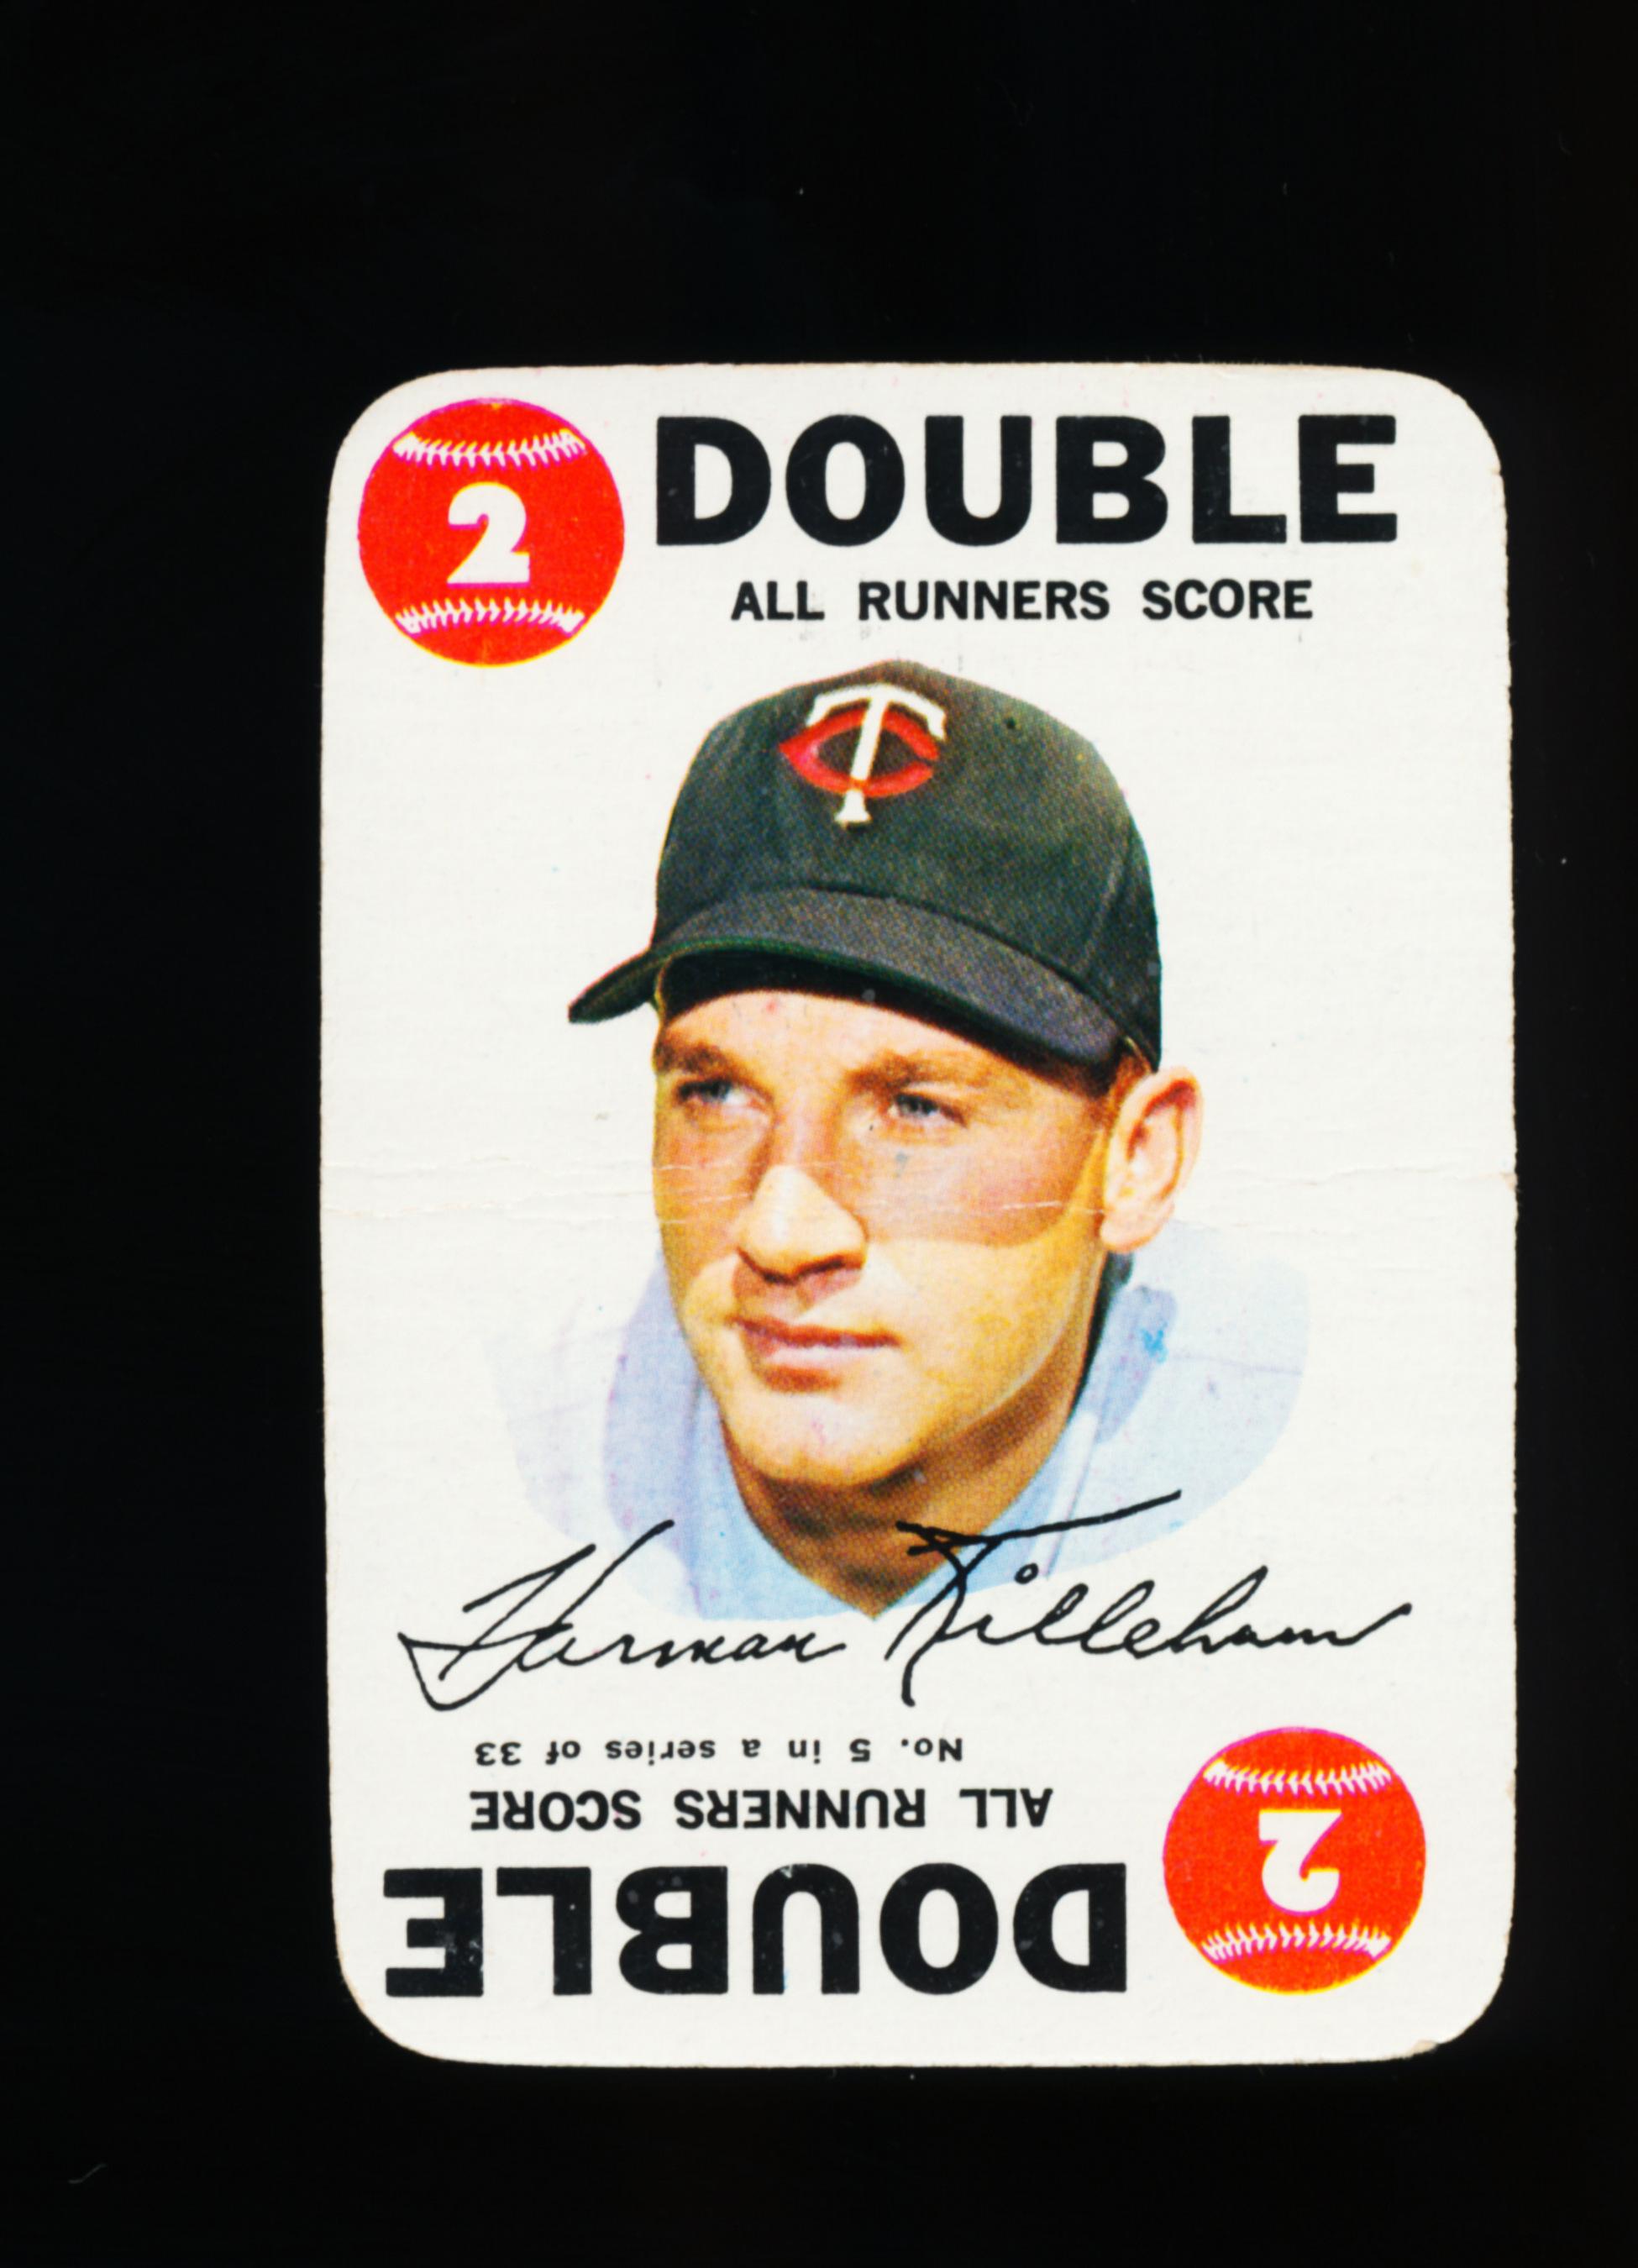 1968 Topps Game Card #5 of 33 Hall of Famer Harmon Killebrew Minnesota Twin